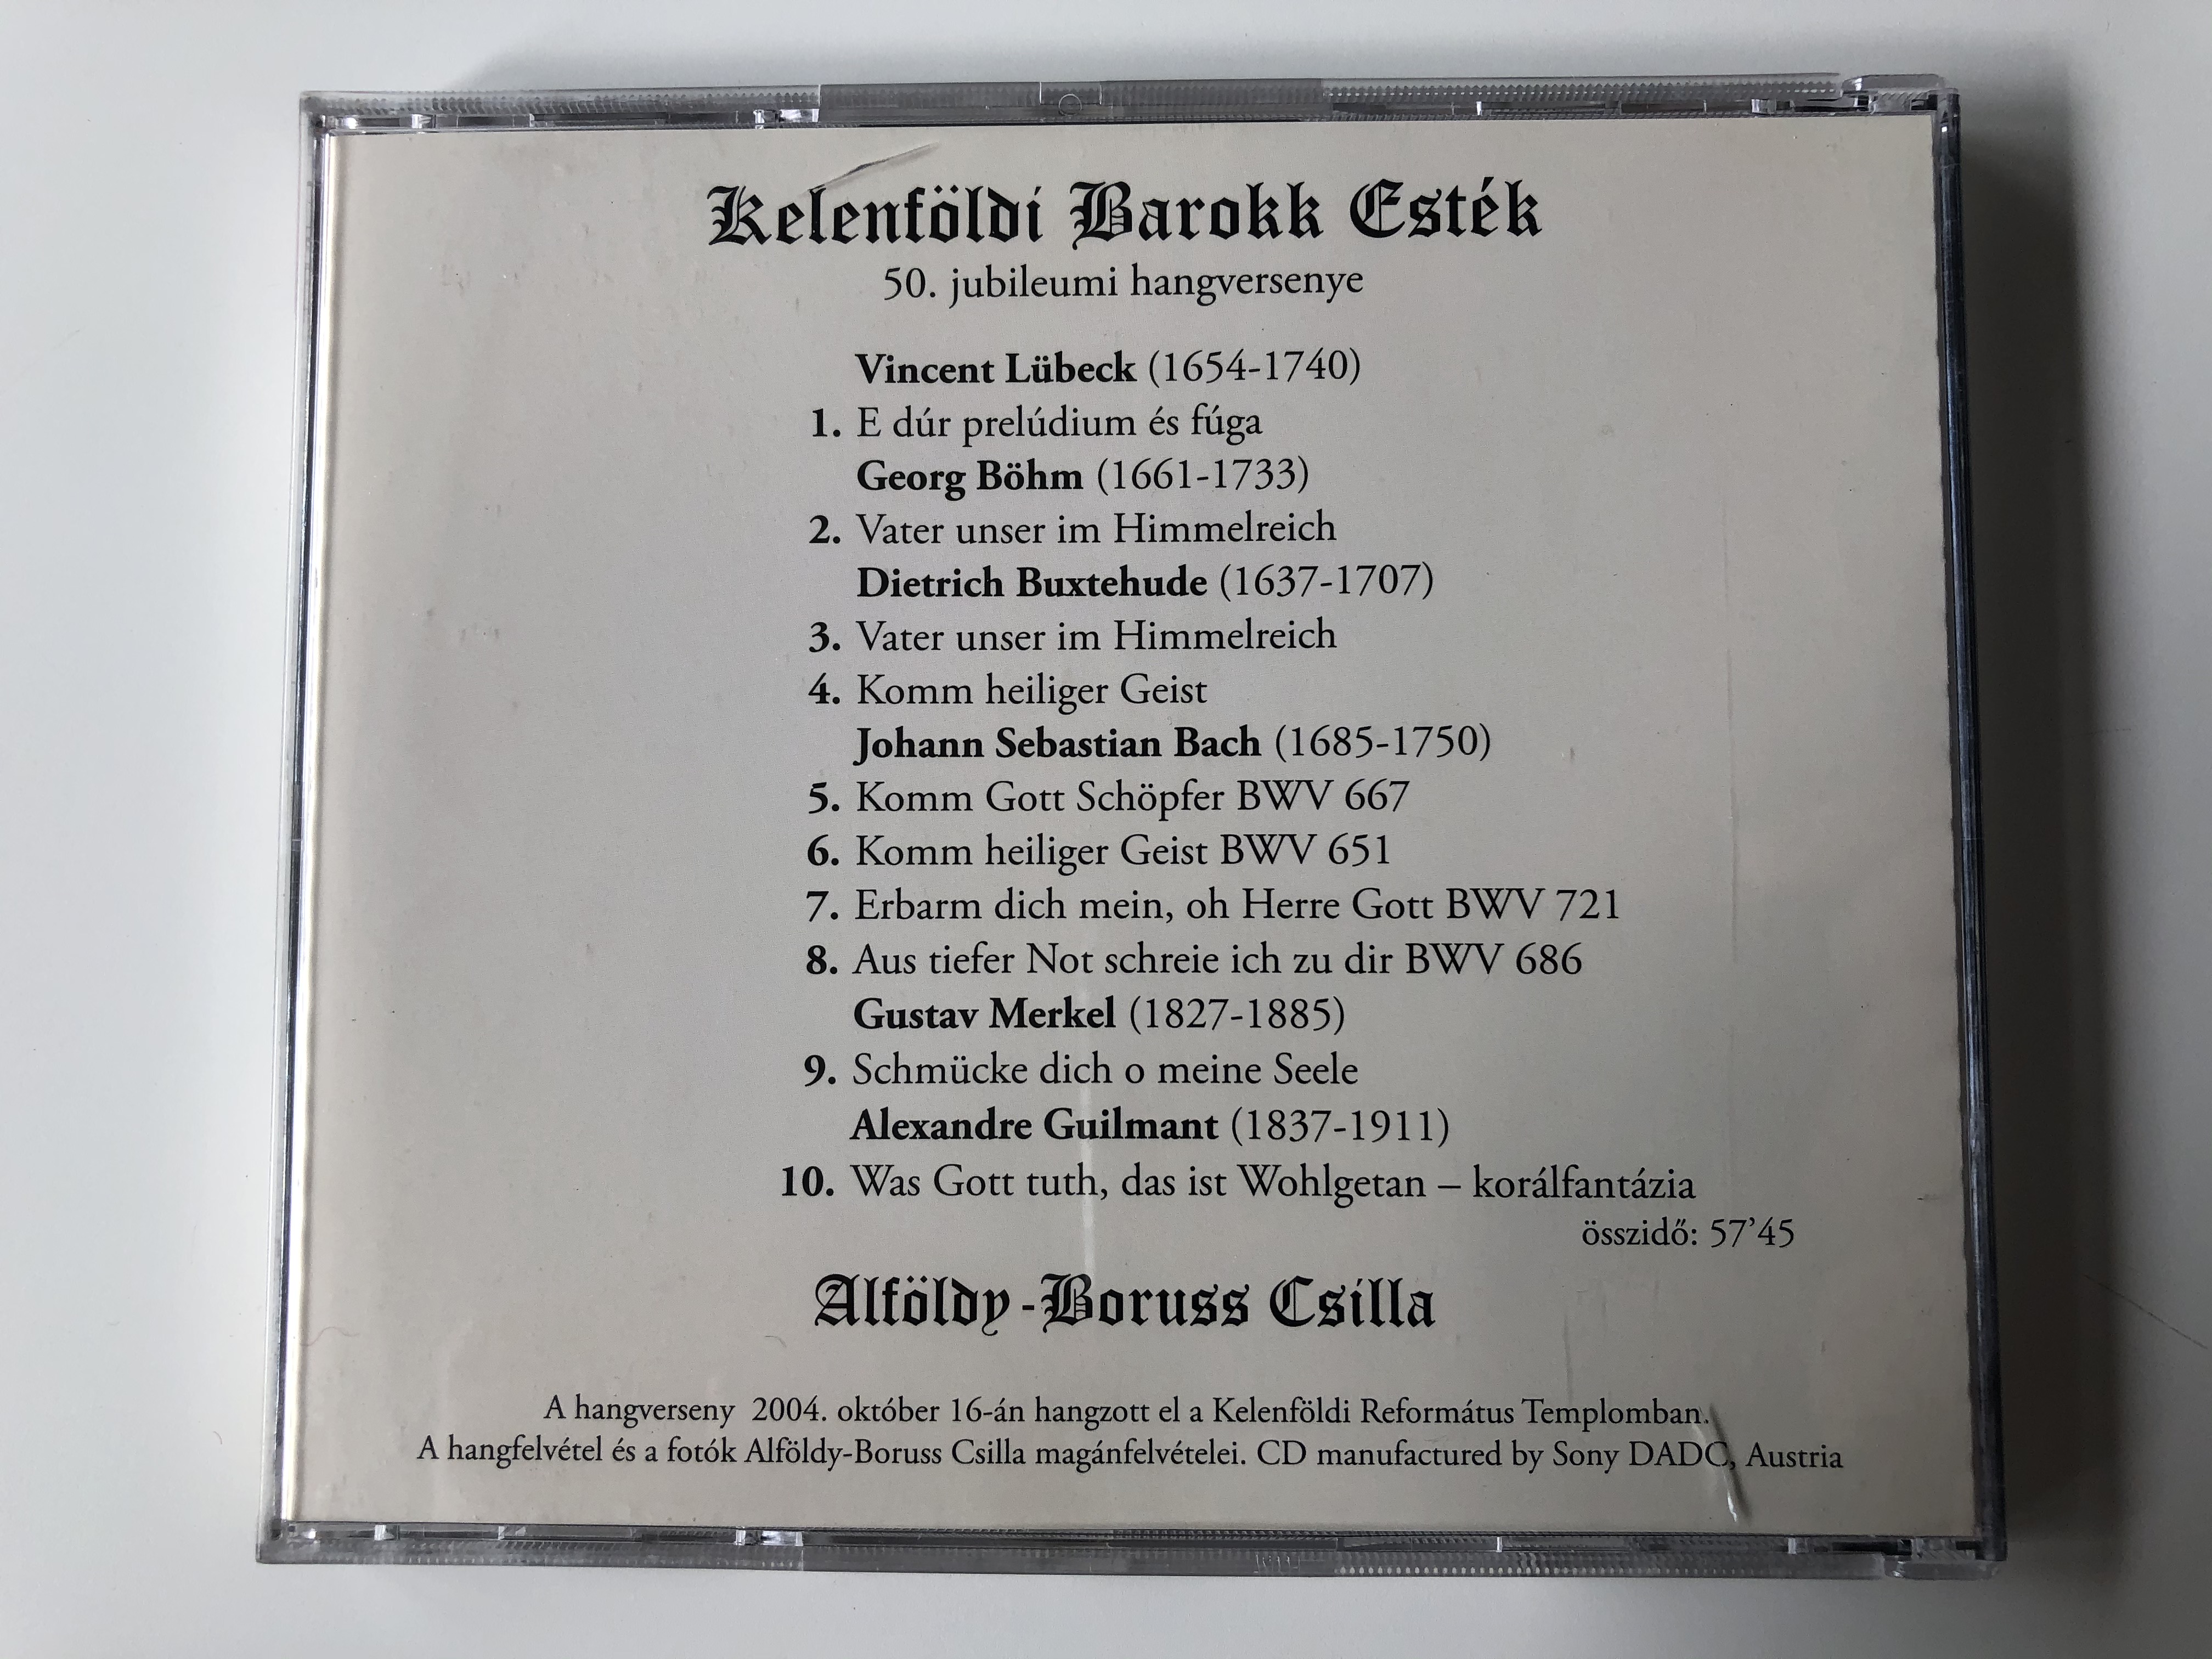 kelenfoldi-barokk-estek-50.-jubileumi-hangversenye-orgonal-alfoldy-boruss-csilla-audio-cd-2004-ab-2005-7-.jpg